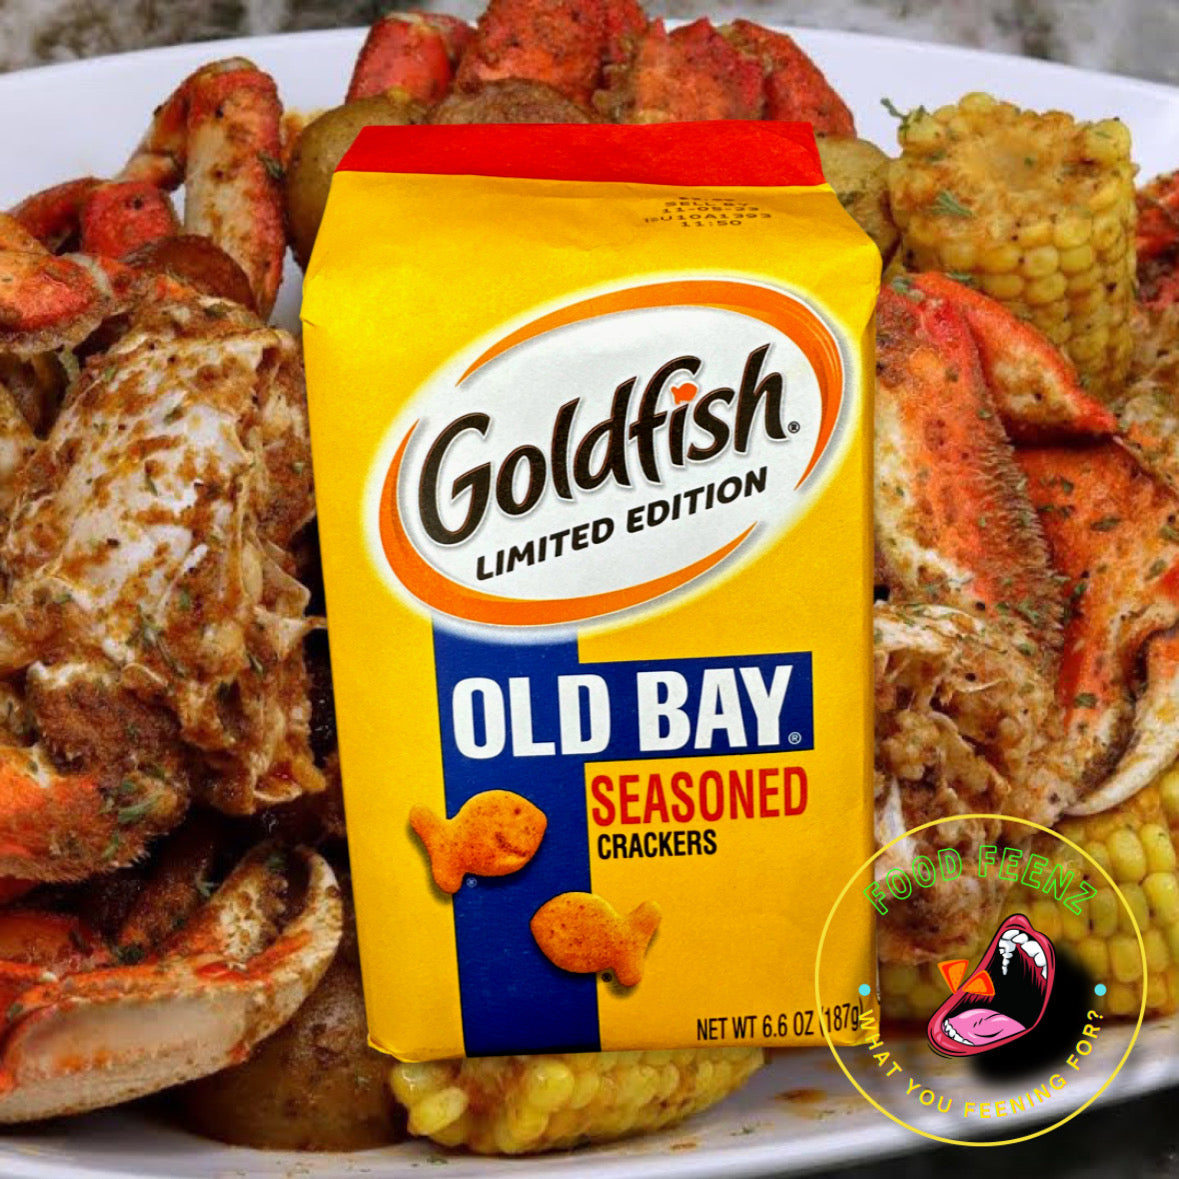 Goldfish Old Bay Seasoned Crackers (Limited Edition)